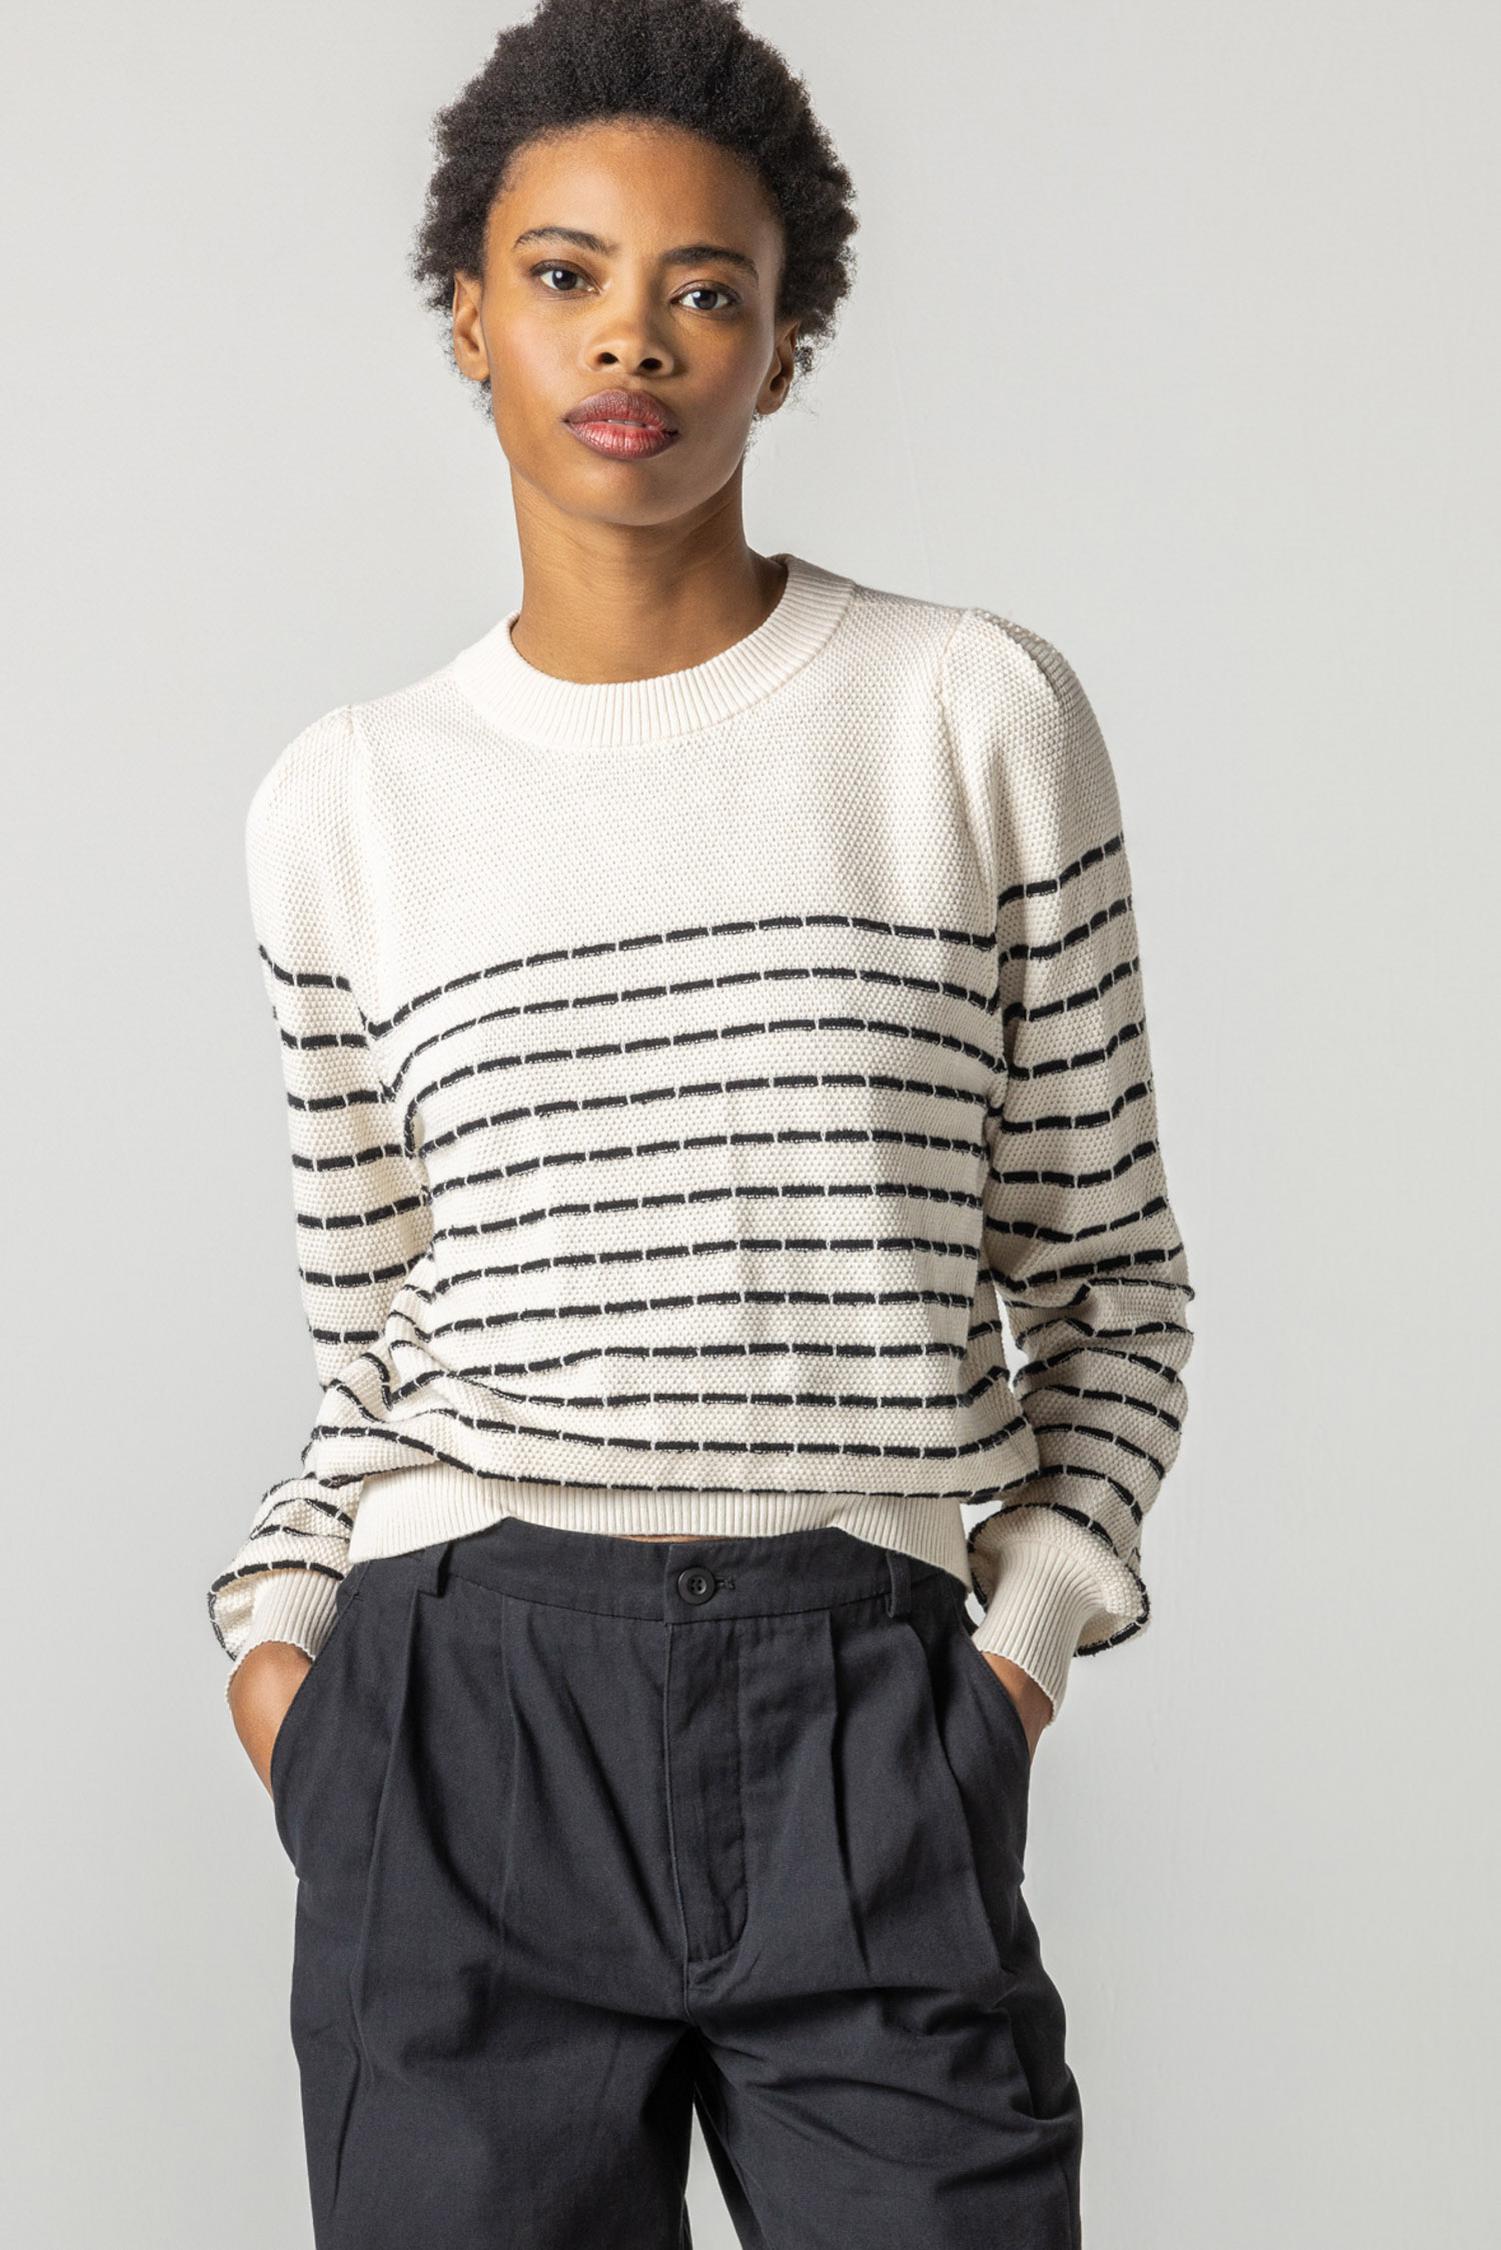 Lilla P - Full Sleeve Crewneck Sweater / Ivory w/ Black Stripe